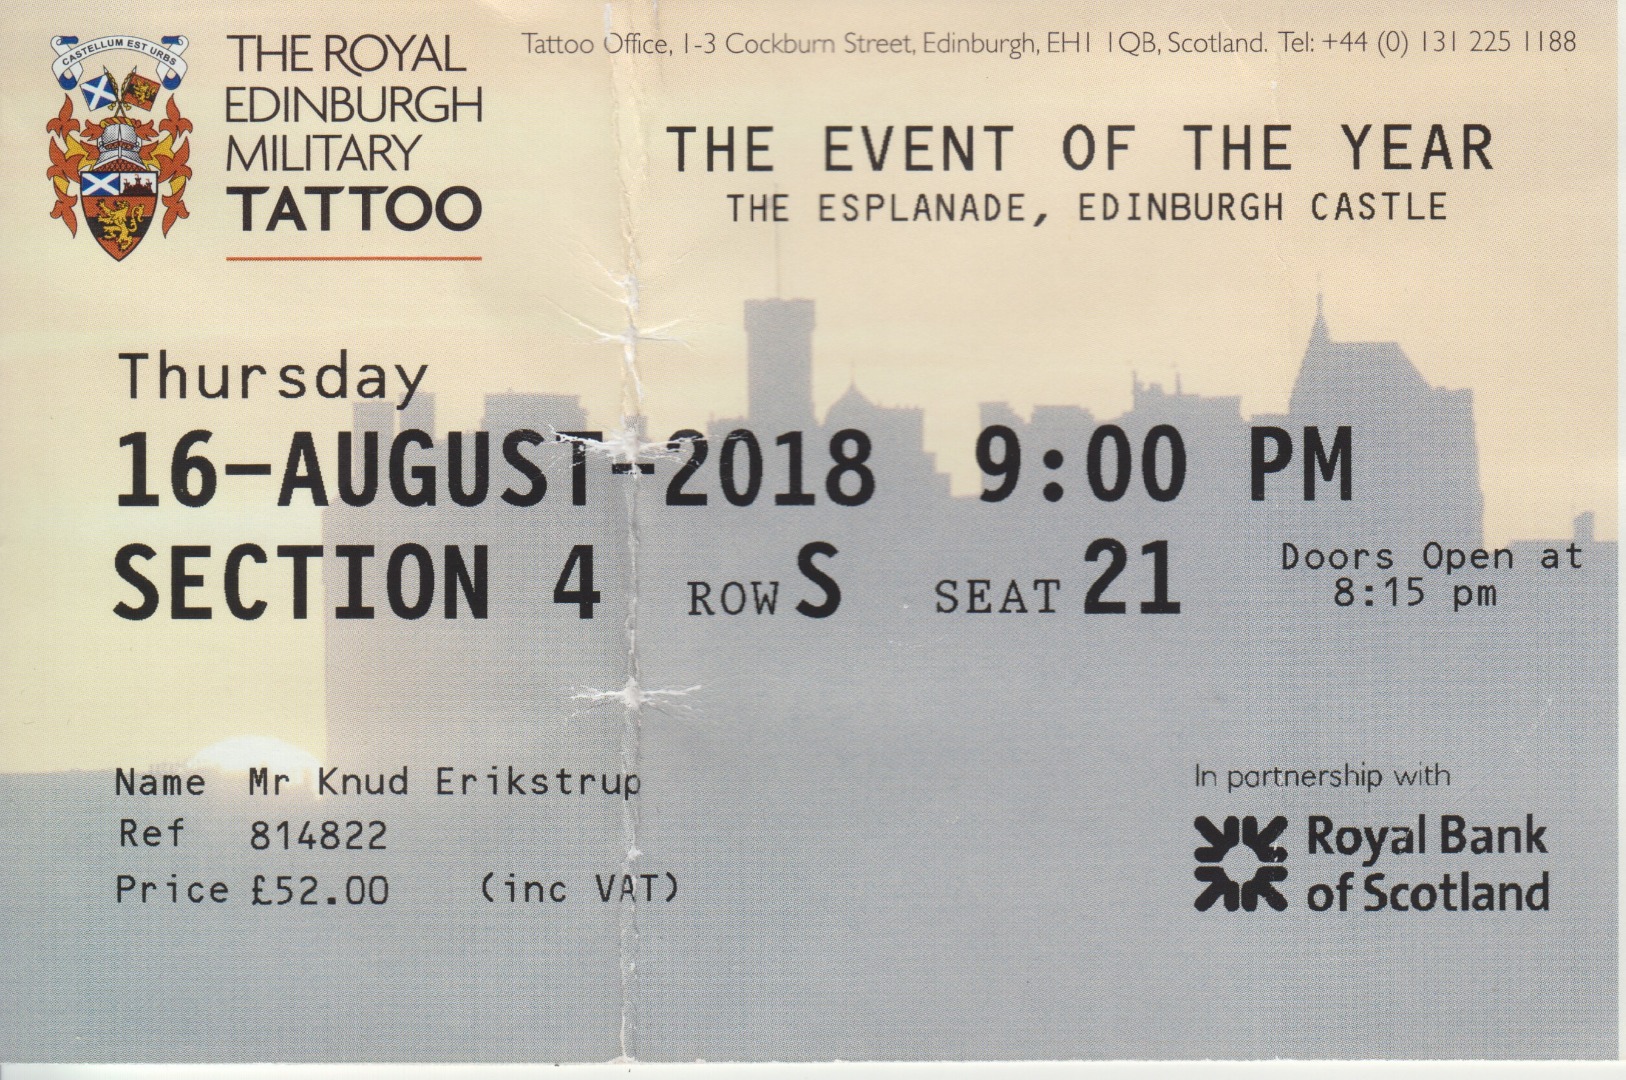 *16. august 2018 - The Royal Edinburgh Military Tattoo